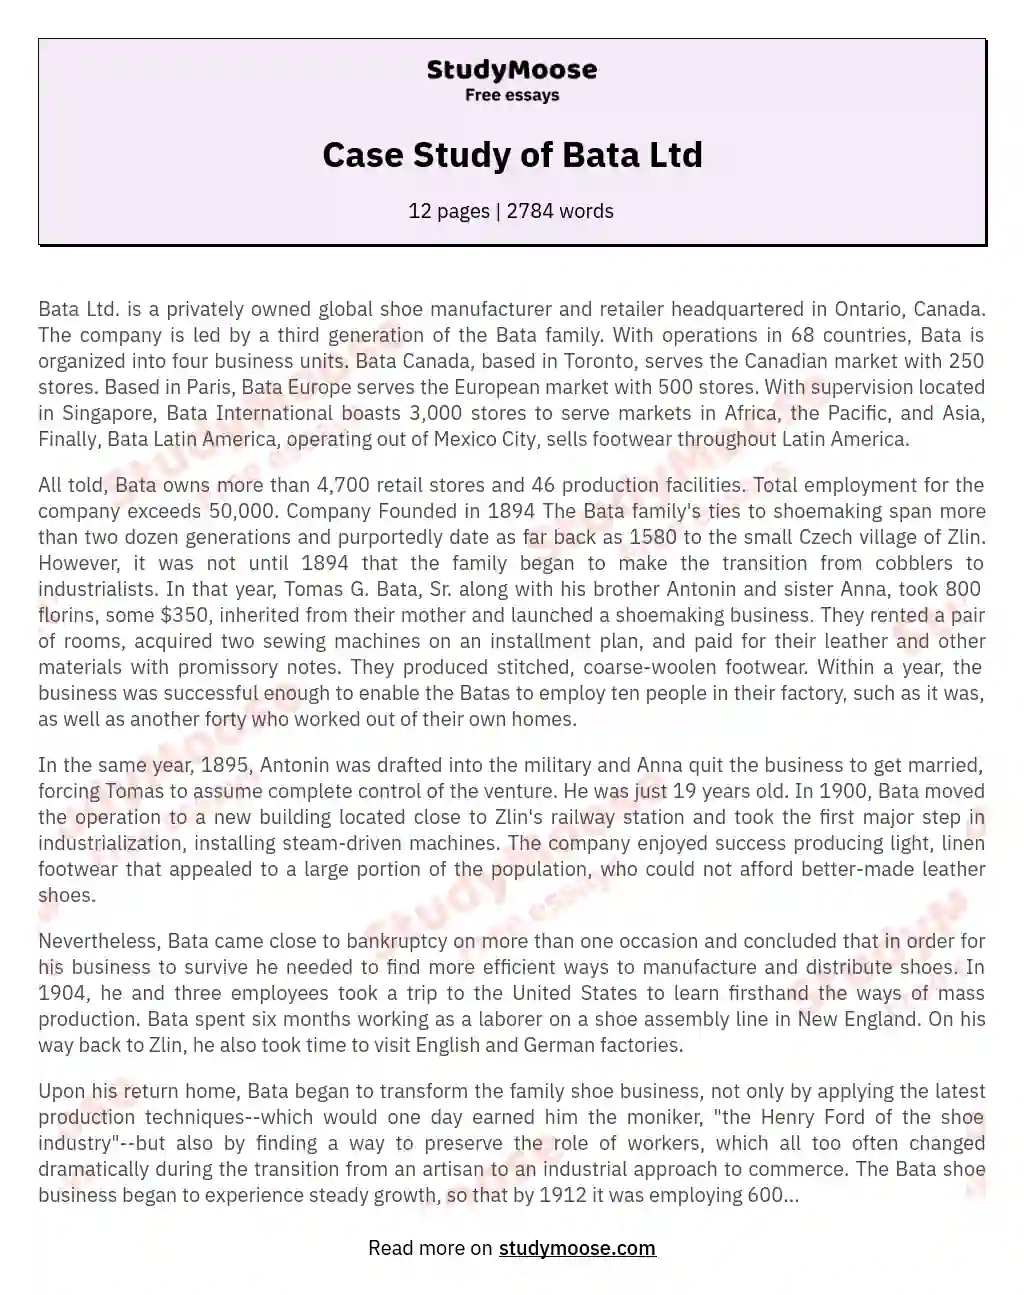 Case Study of Bata Ltd essay